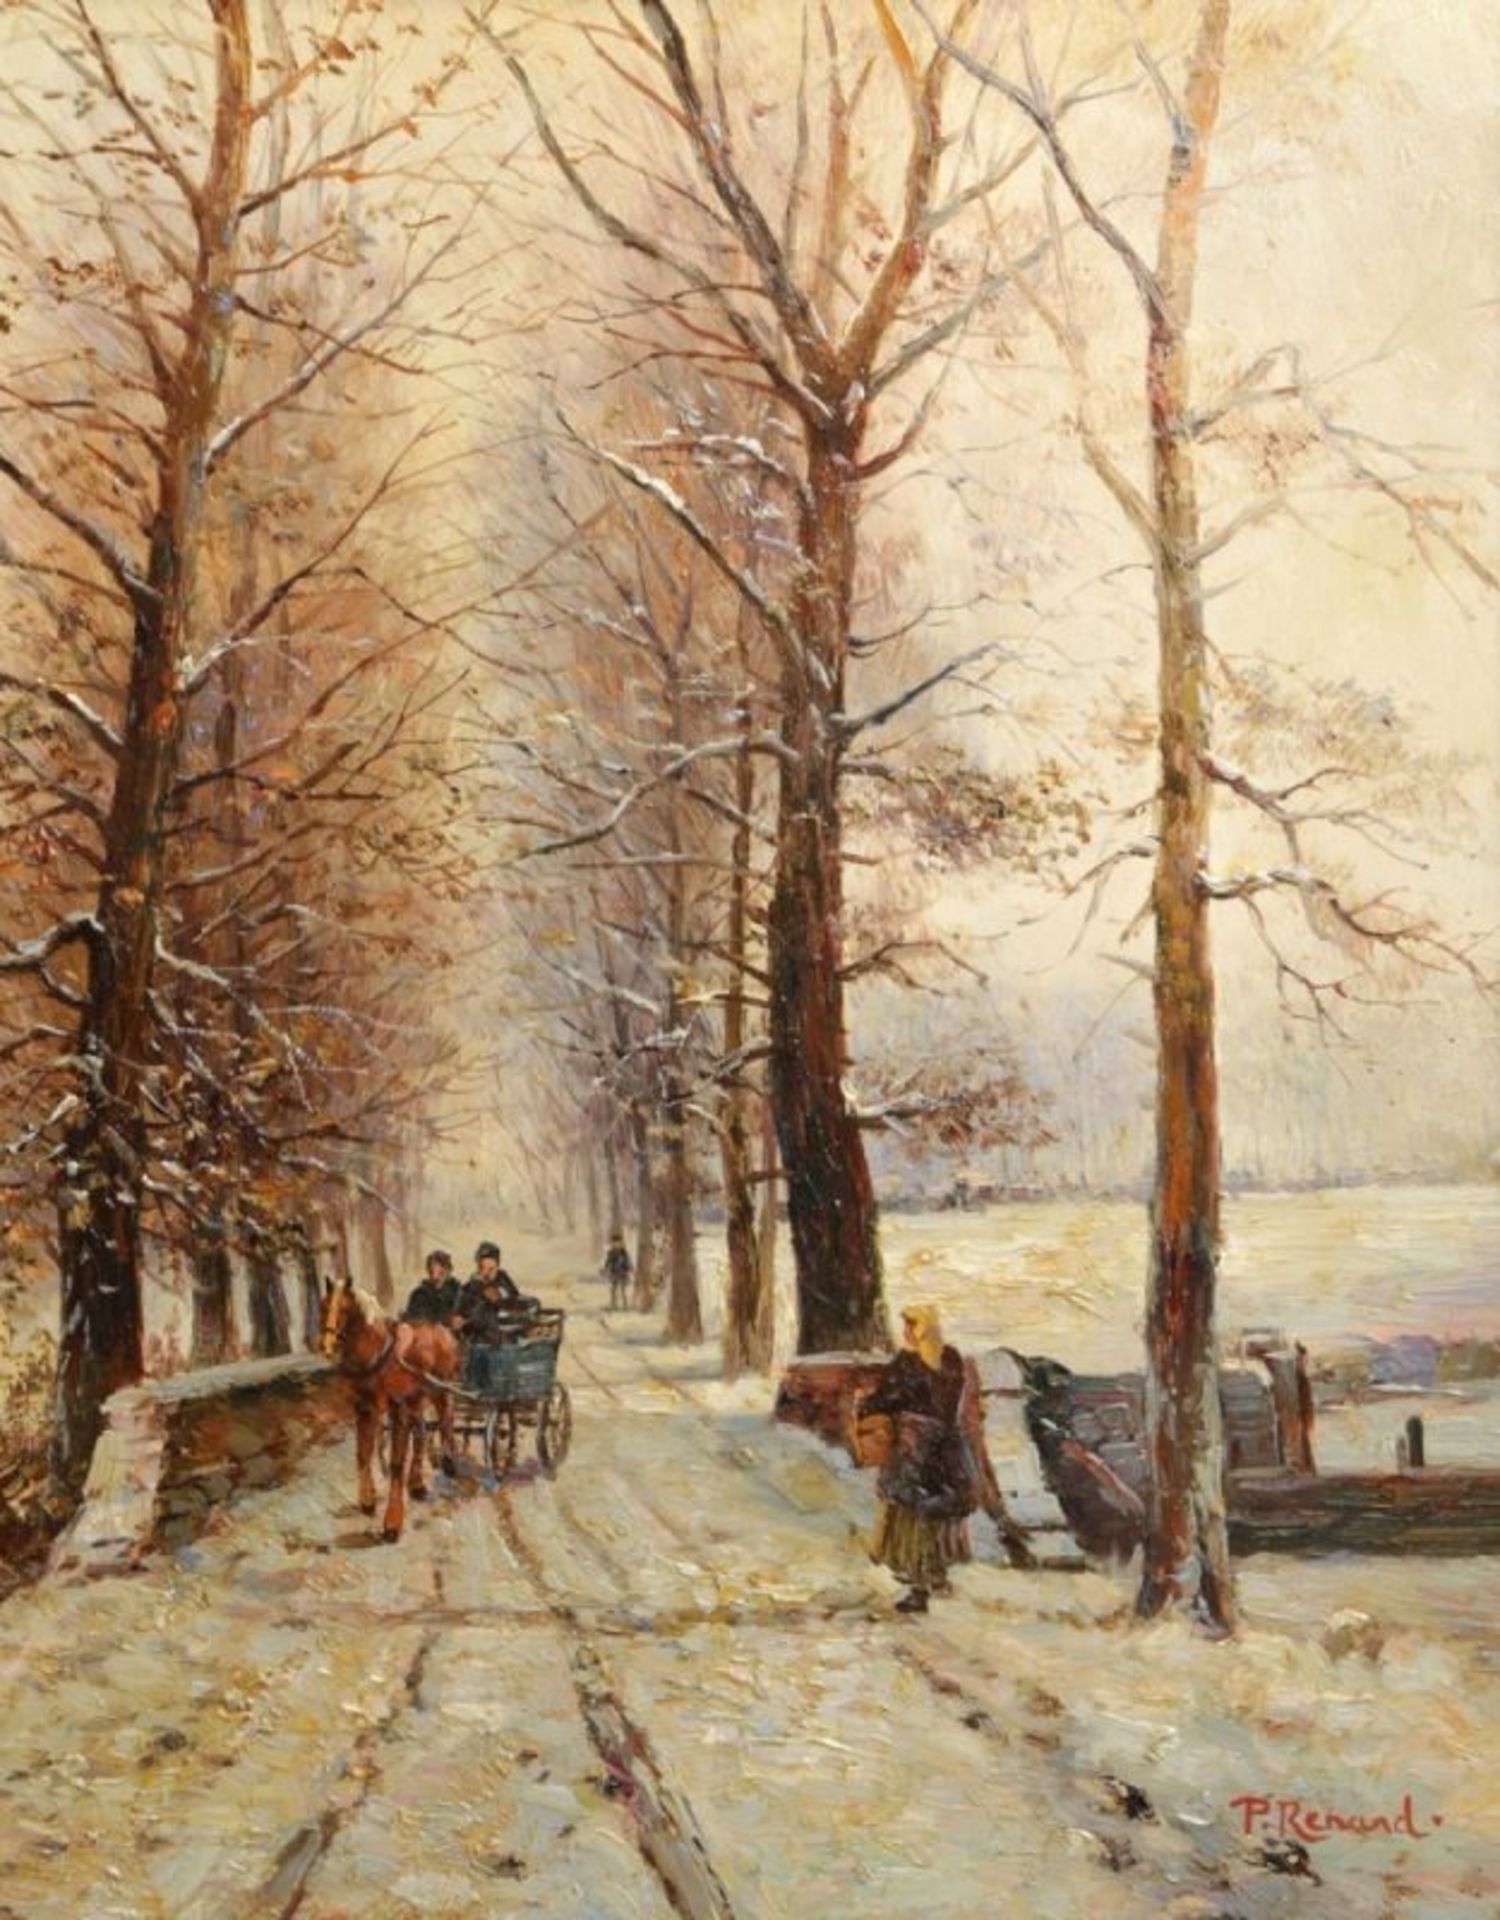 Renard, P., belgischer Maler 2. Hälfte 20. Jh. "Winterlandschaft mit Allee", sign.,Öl/Holz, 25